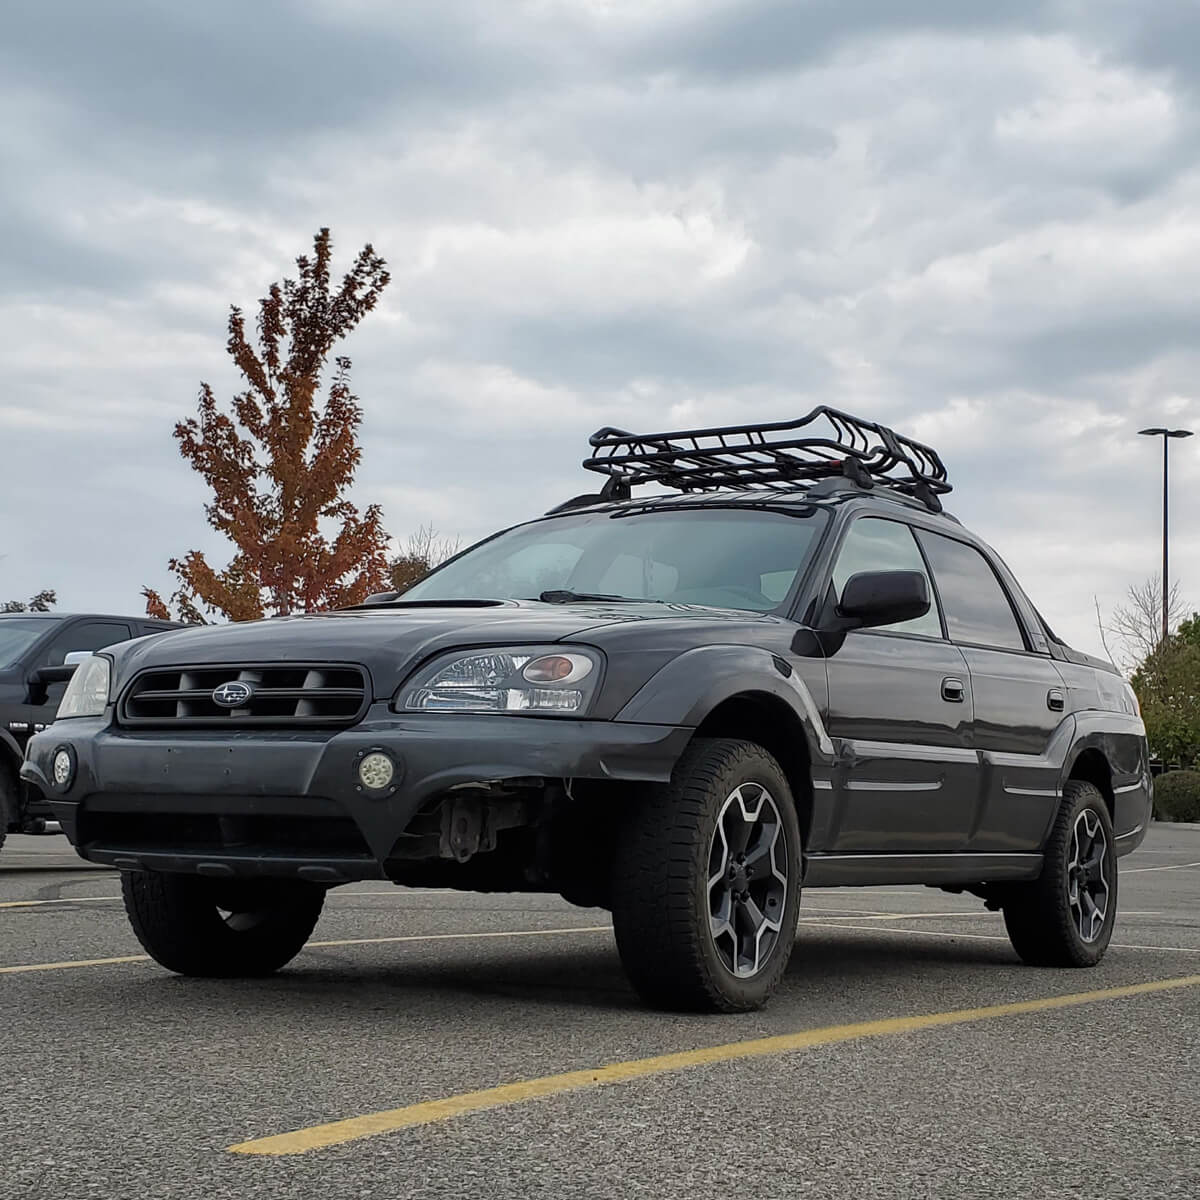 Subaru Baja roof rack and a cargo basket